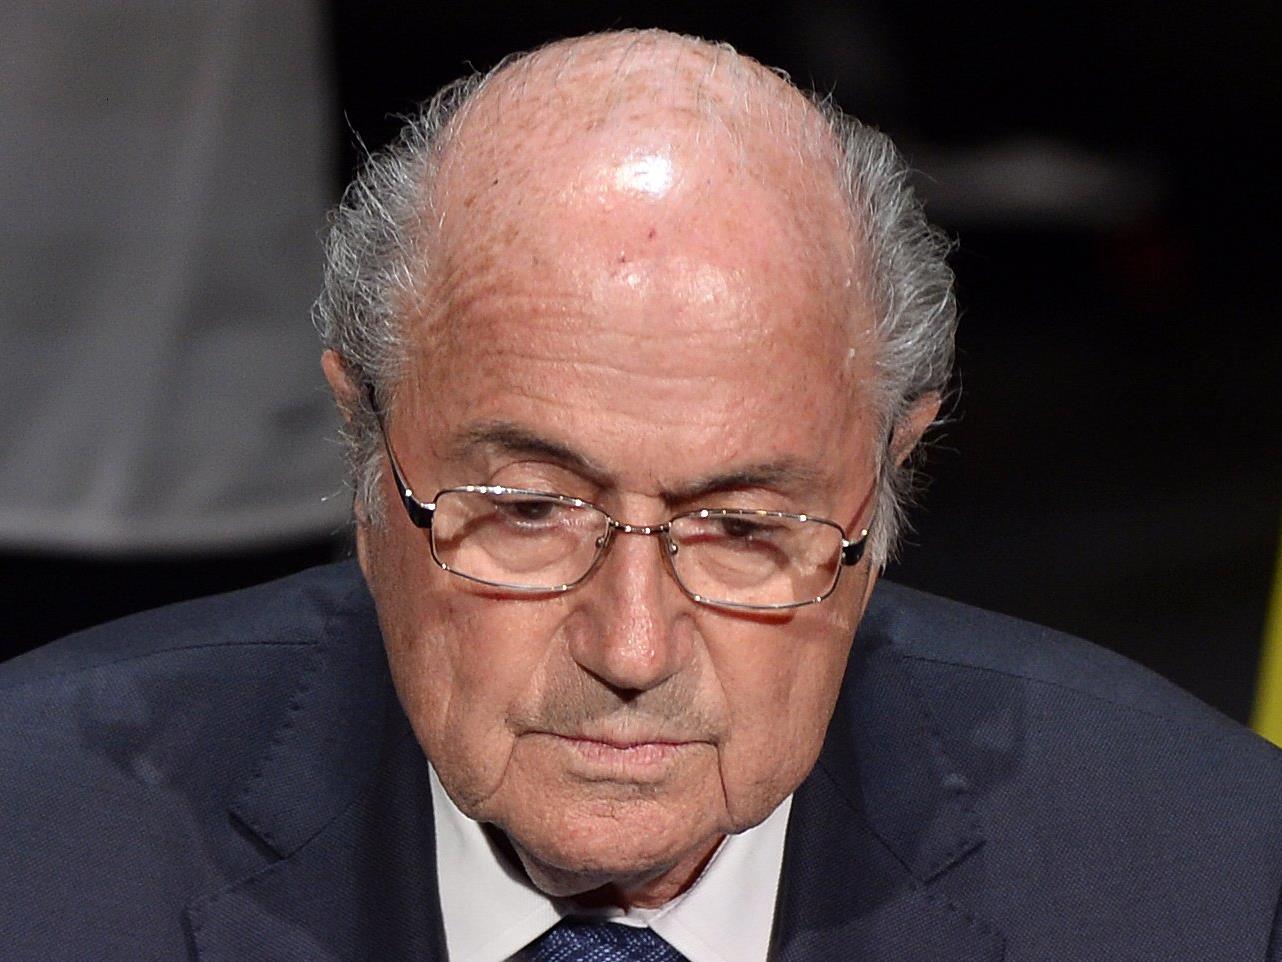 Ermittlungen gegen Blatter